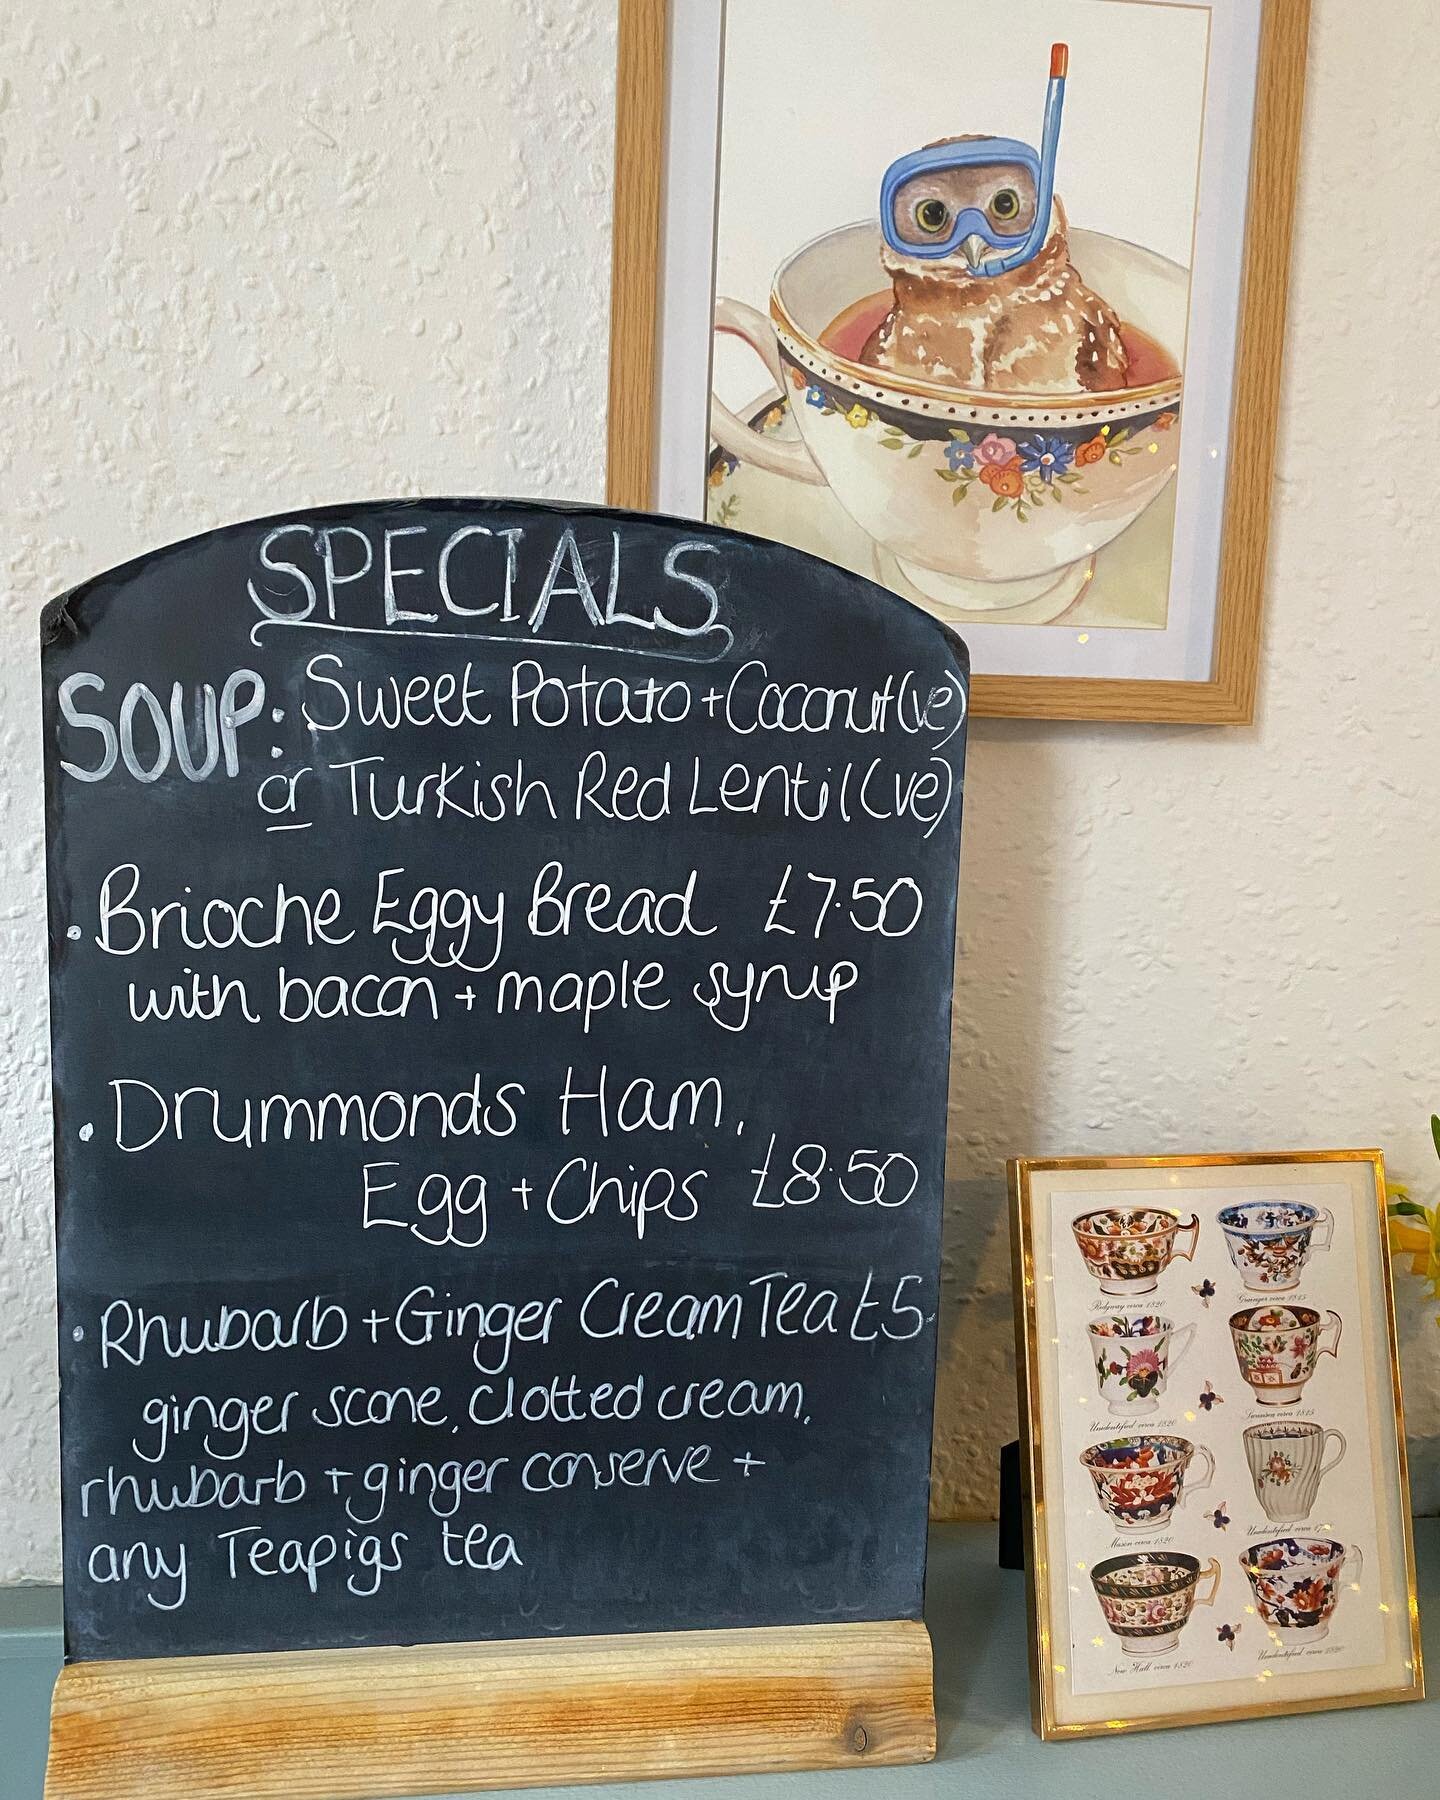 #romsey #cafe #romseycafe #specialsboard #weeklyspecials #soupoftheday #hampshire #hampshirecafe #testvalley #teacups